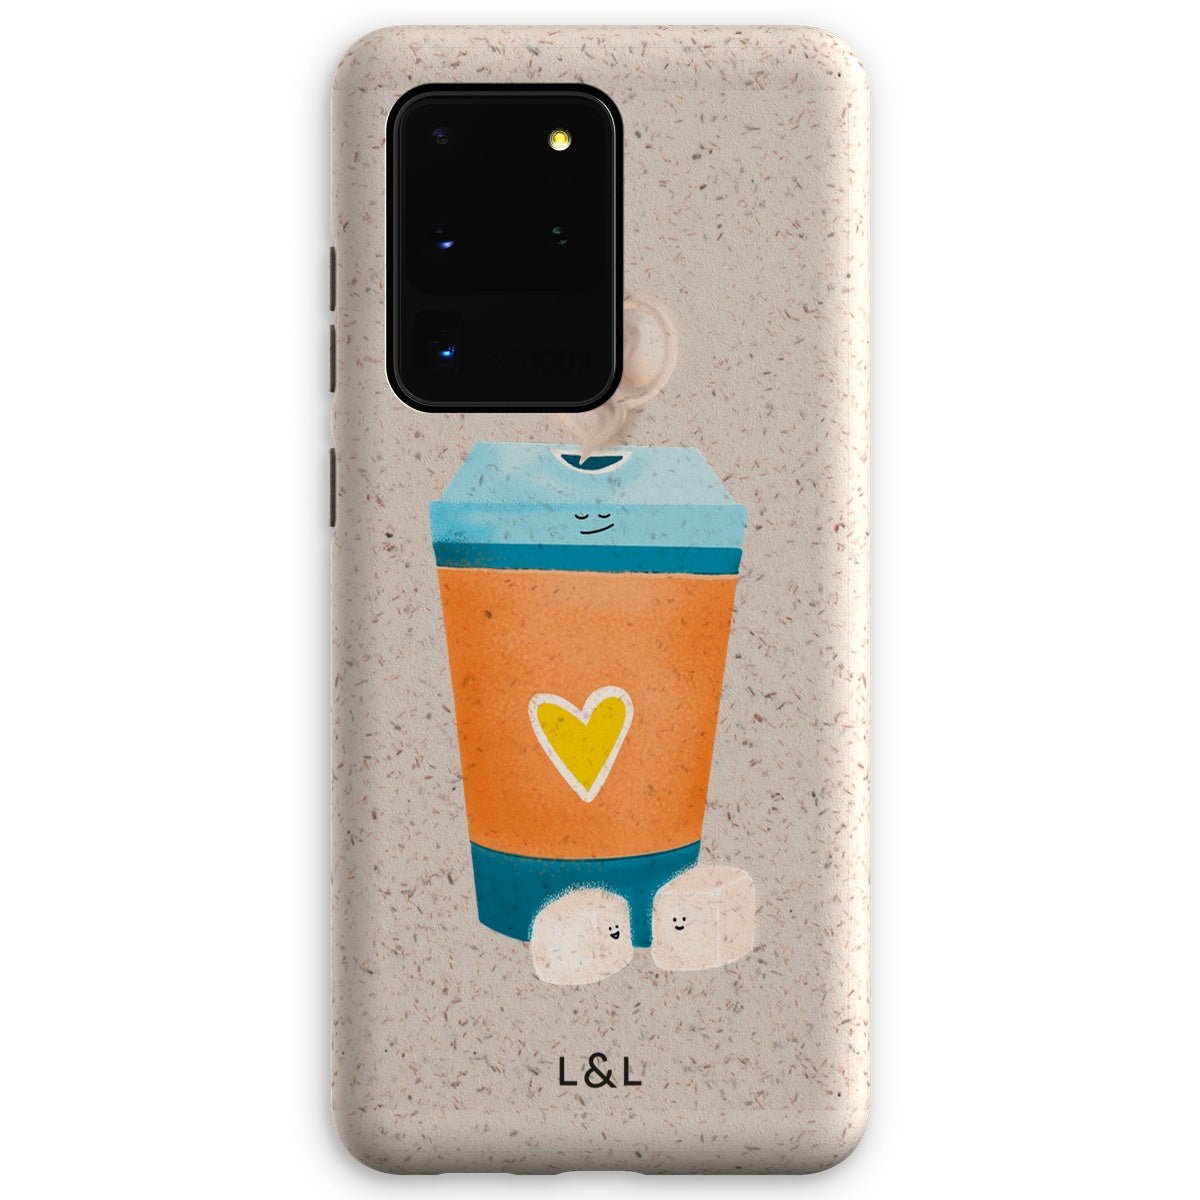 Cup of tea Eco Phone Case - Loam & Lore